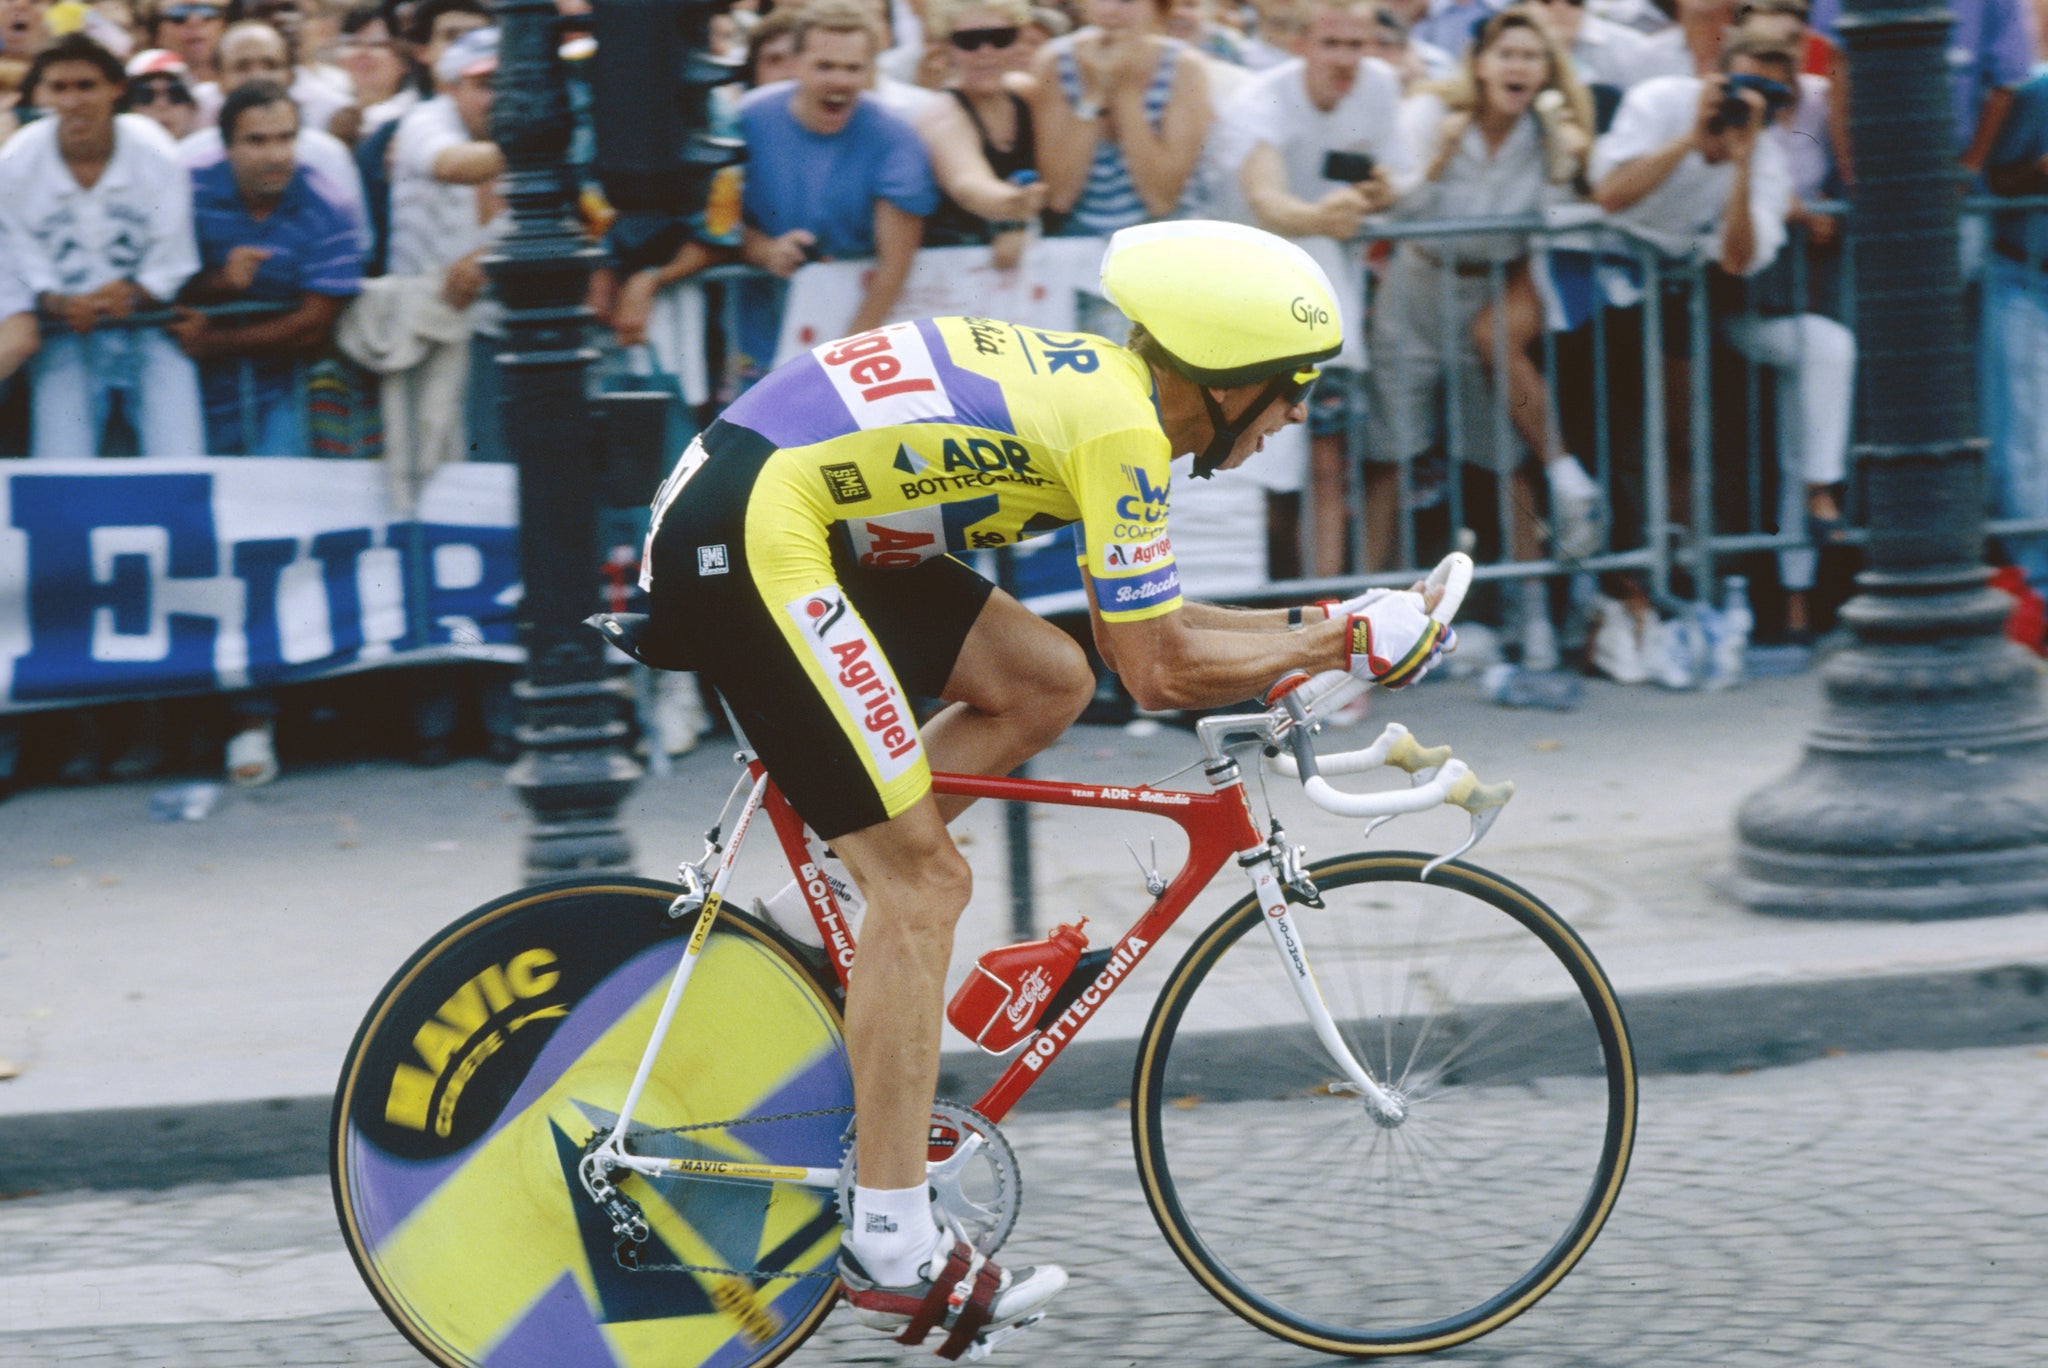 Greag lemond 1989 tour de france bike mavic comete disc wheel